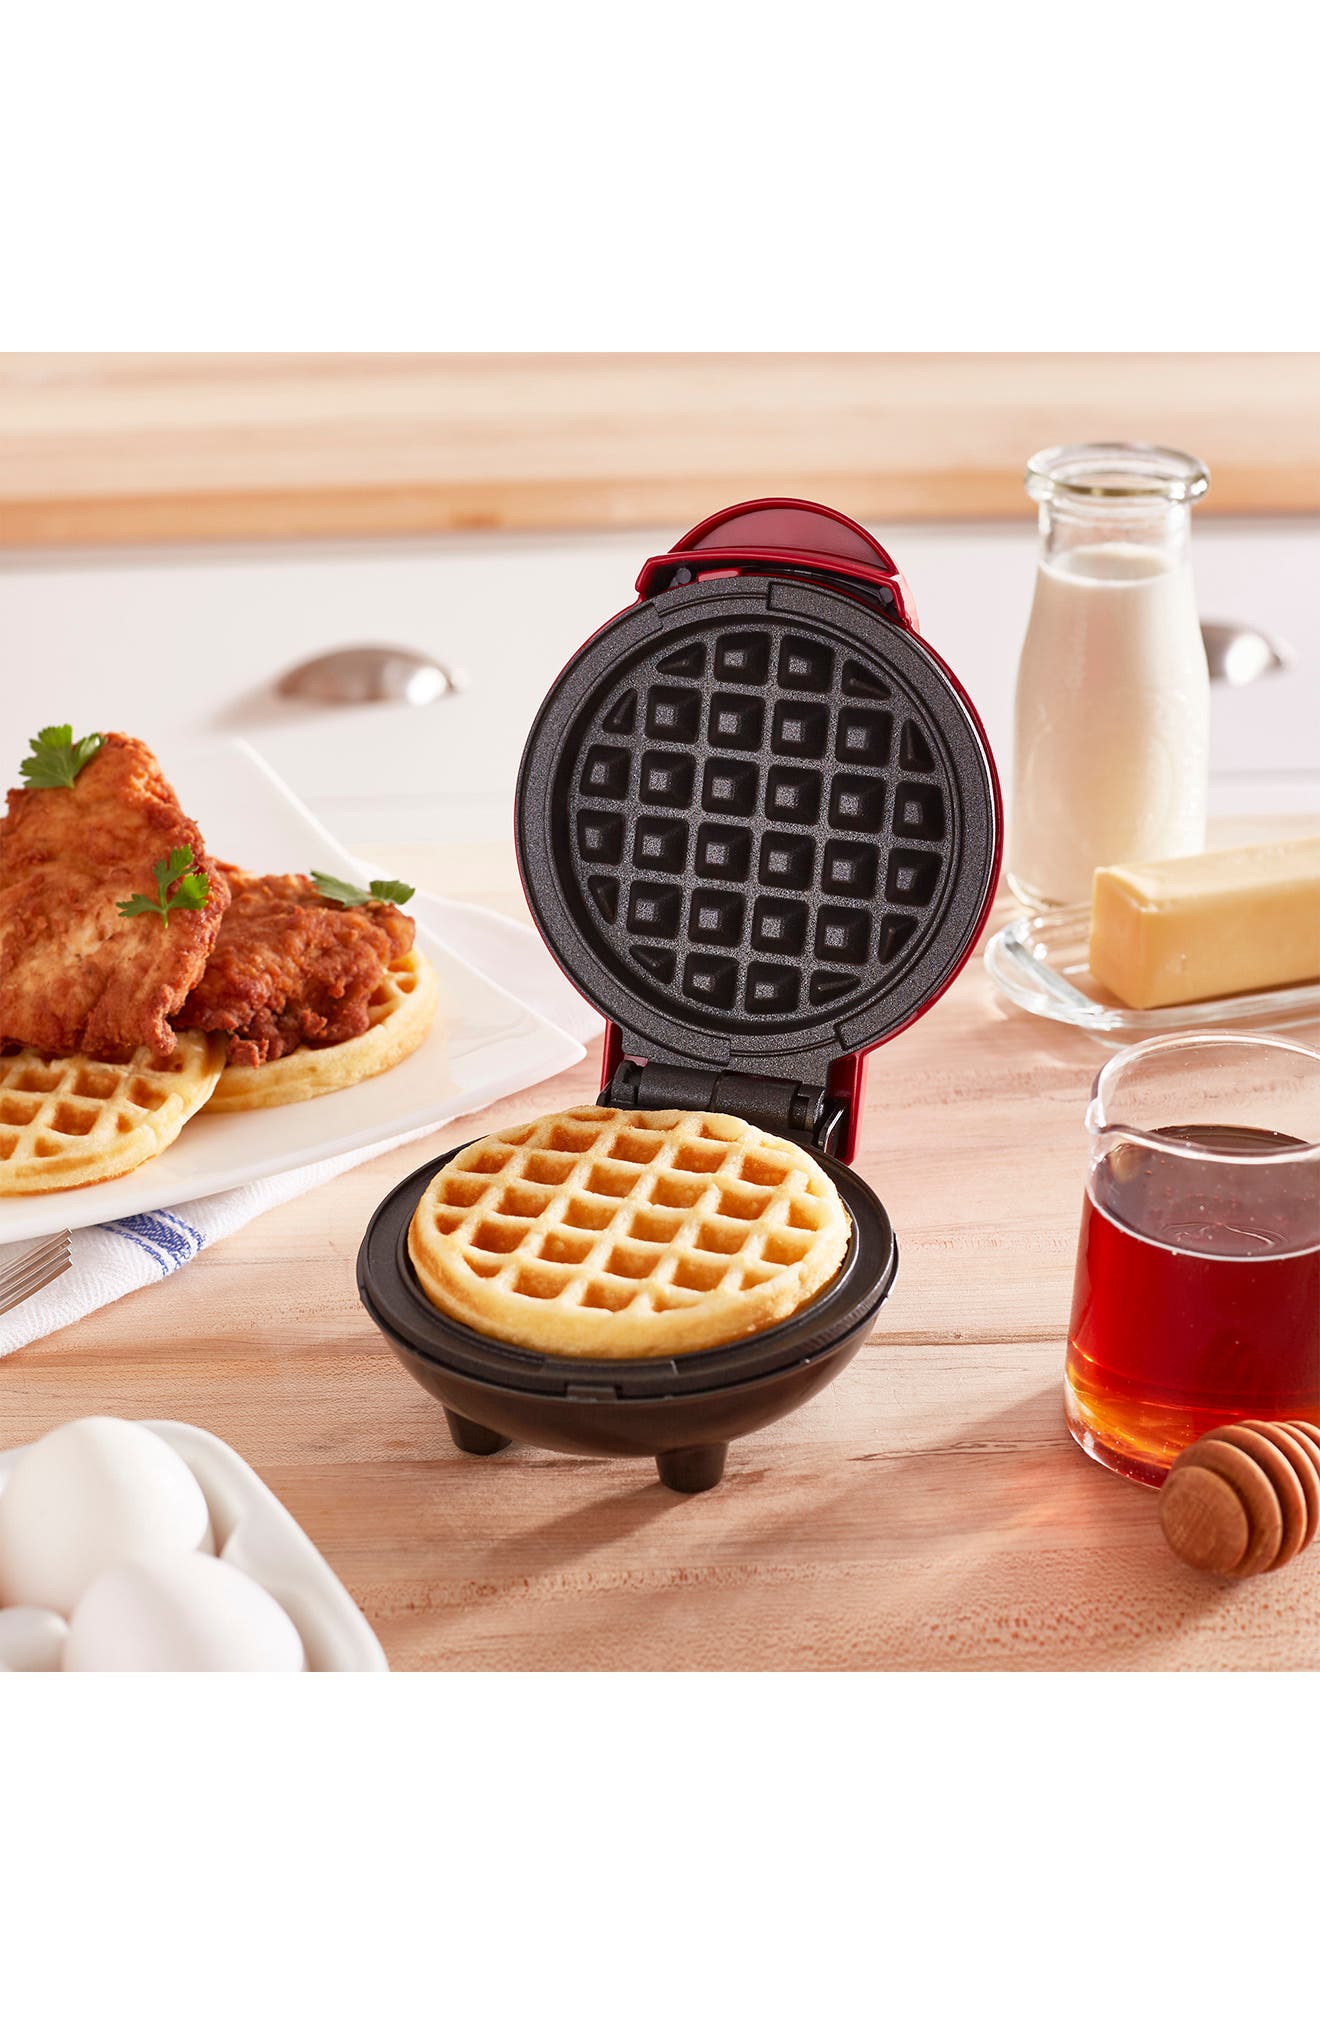 1 to 12 Miniature Waffle Maker Iron Miniature Cooking Scenery Breakfast Decor